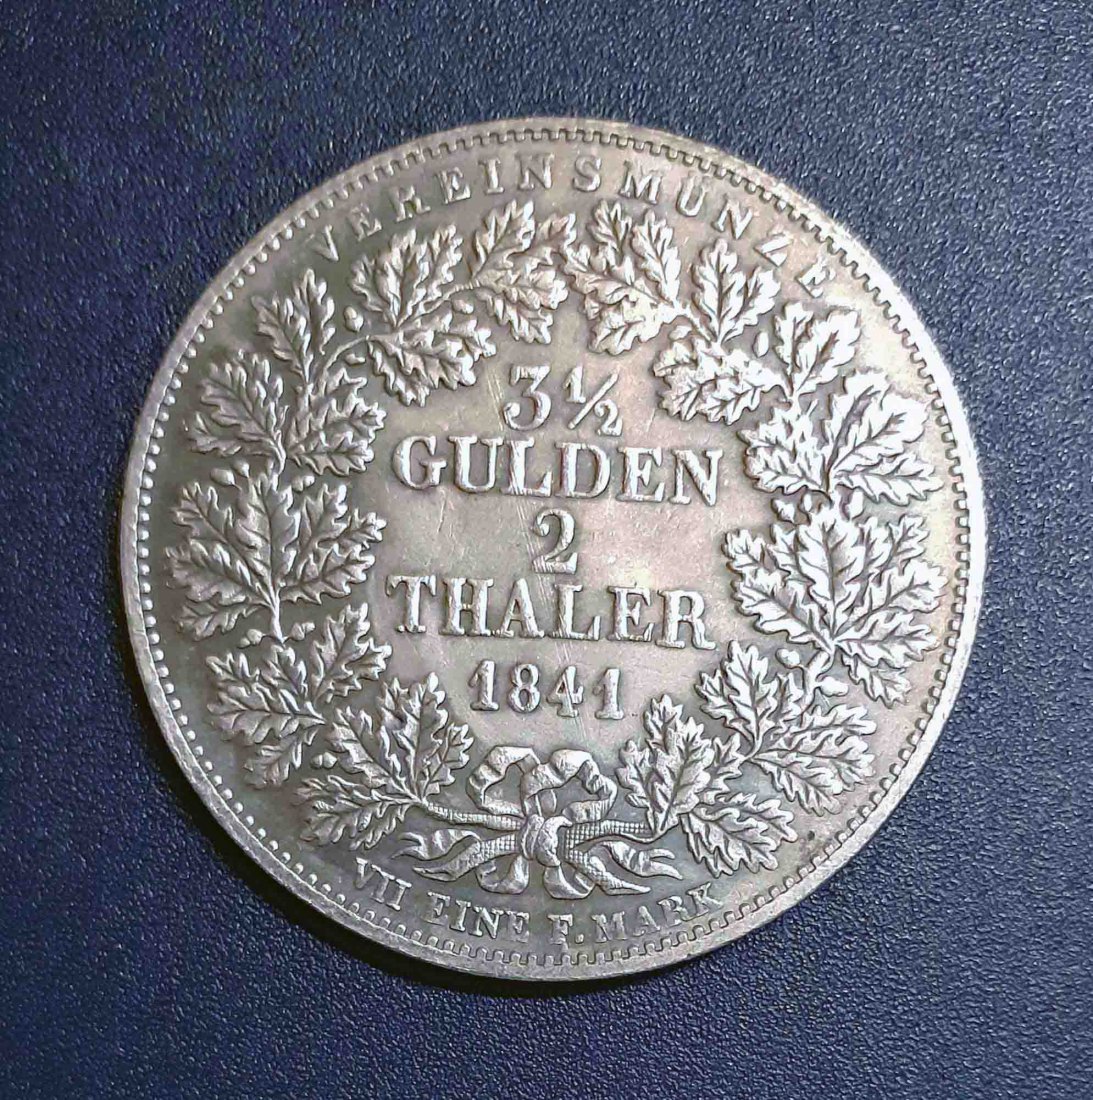  052. Nachprägung 3 1/2 Gulden 2 Taler 1841 Bayern Ludwig I.   